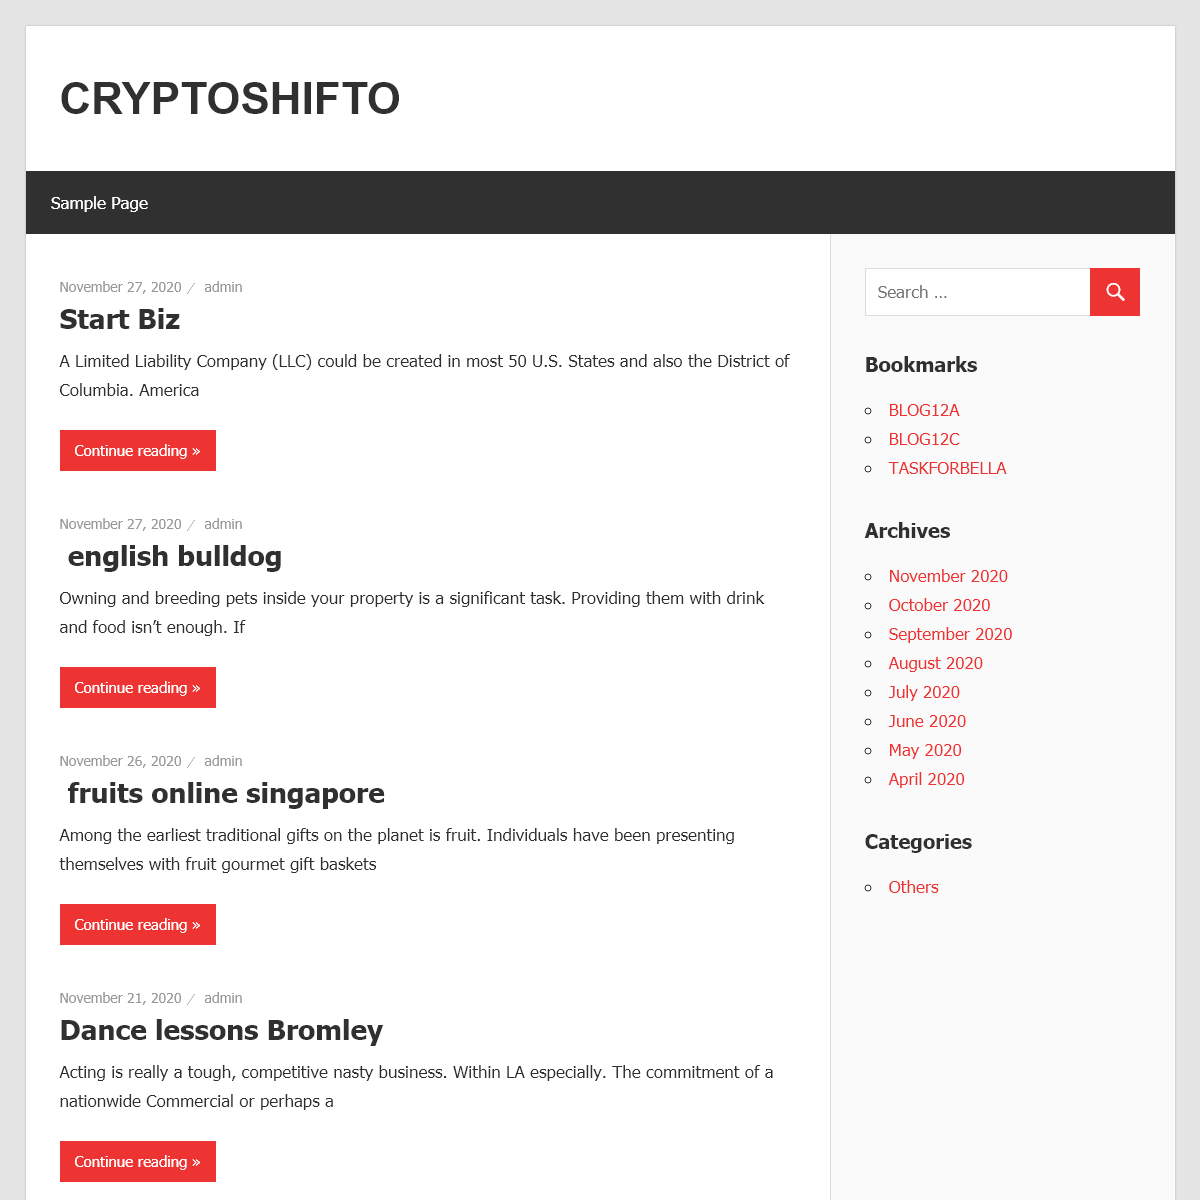 A complete backup of cryptoshifto.com